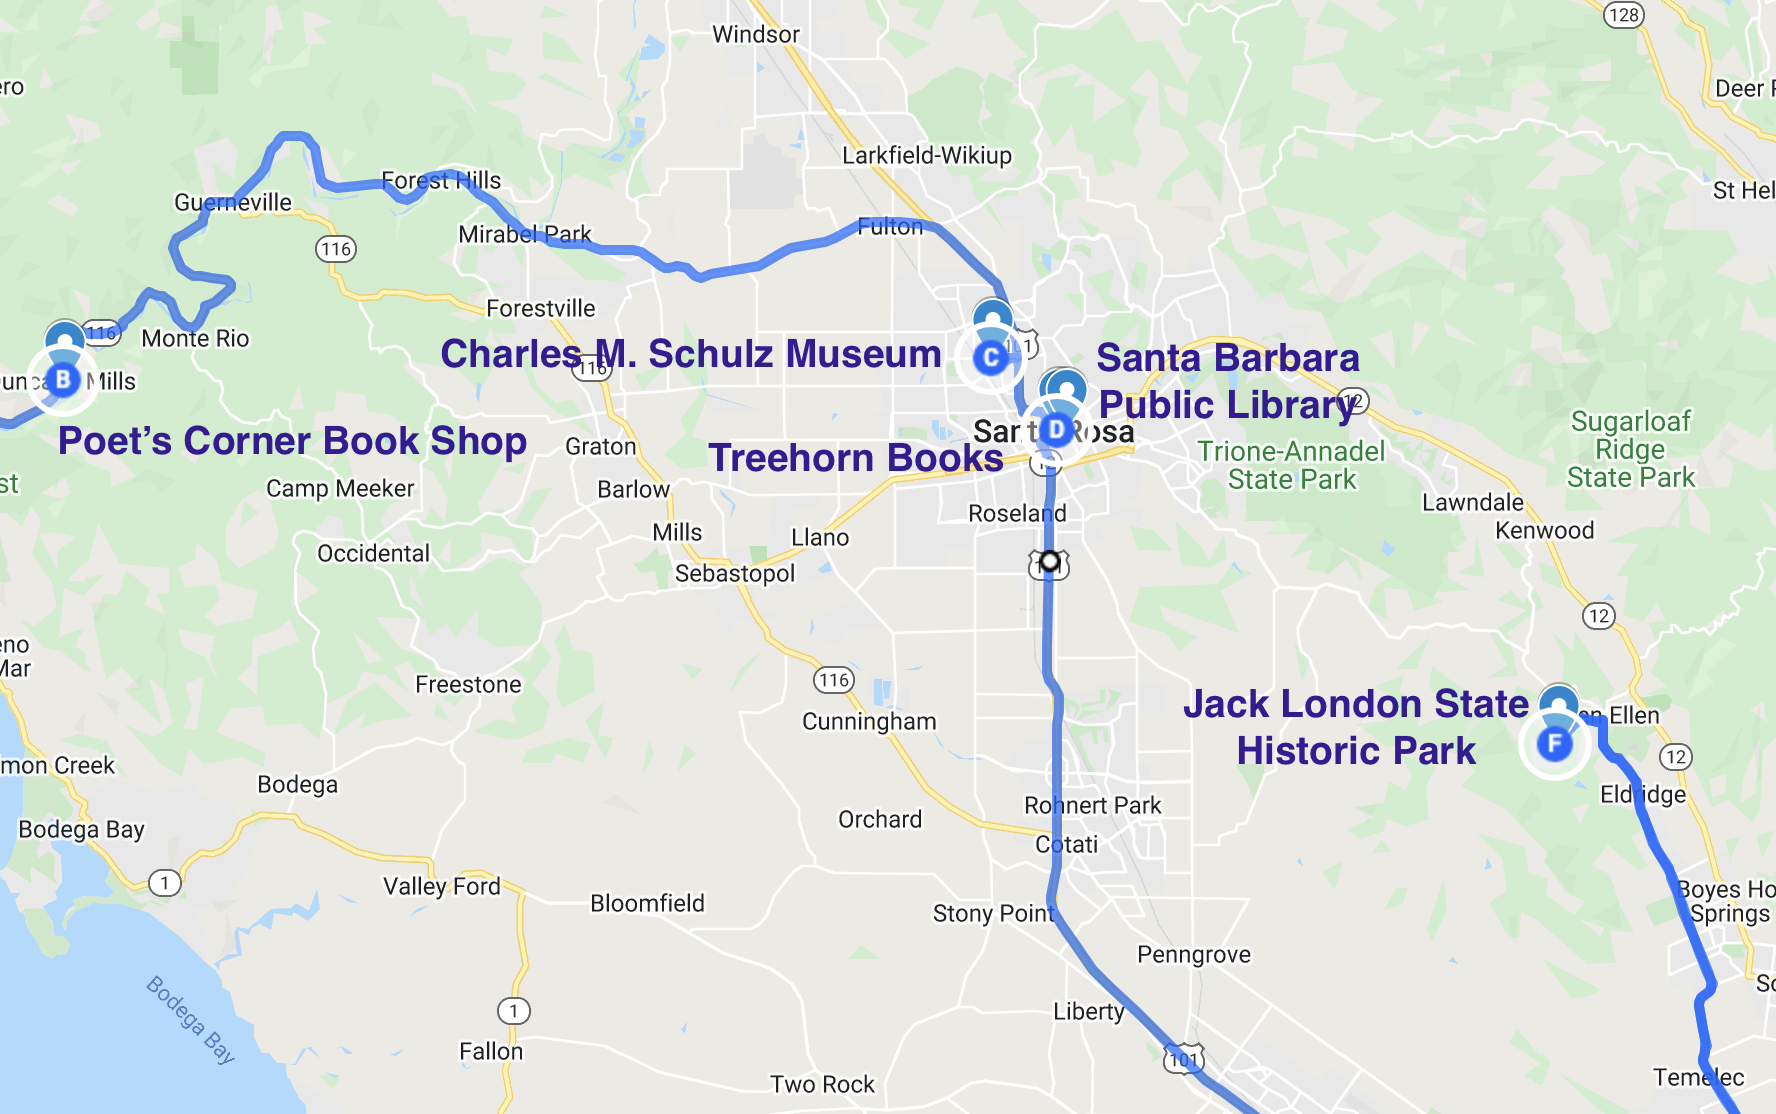 map of literary spots near and in Santa Rosa California